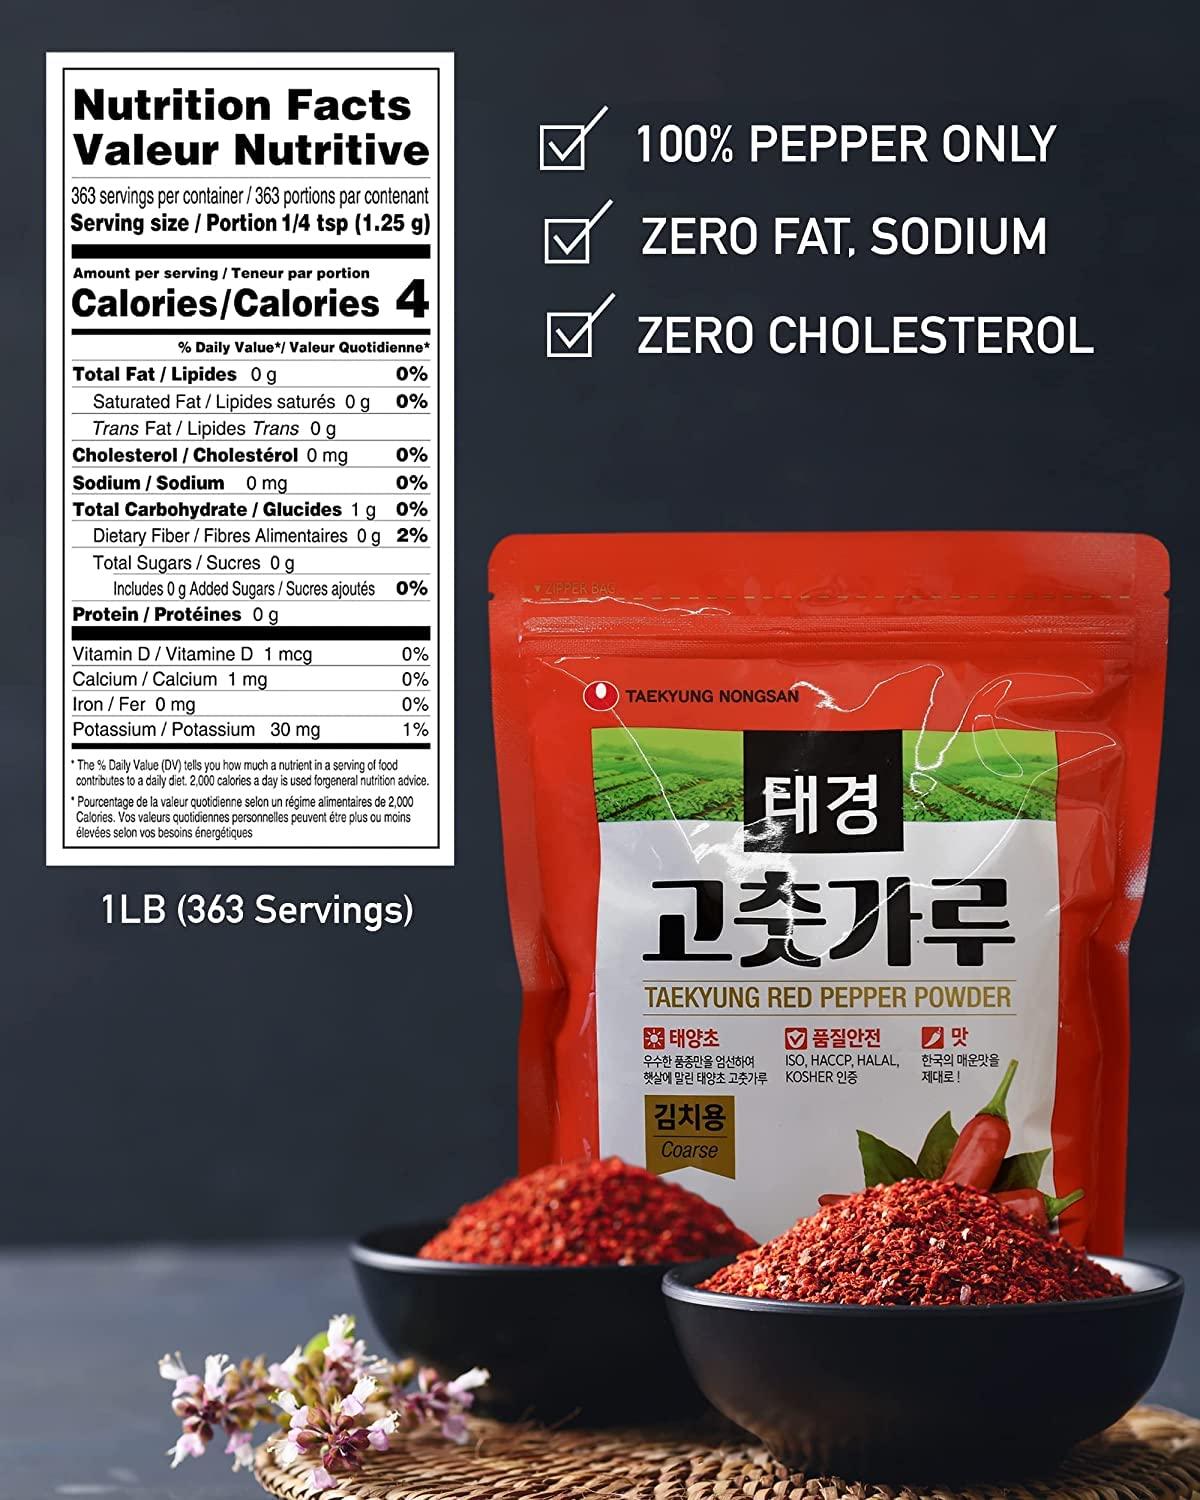 Korean Chili Powder - Korean Gochugaru Flakes